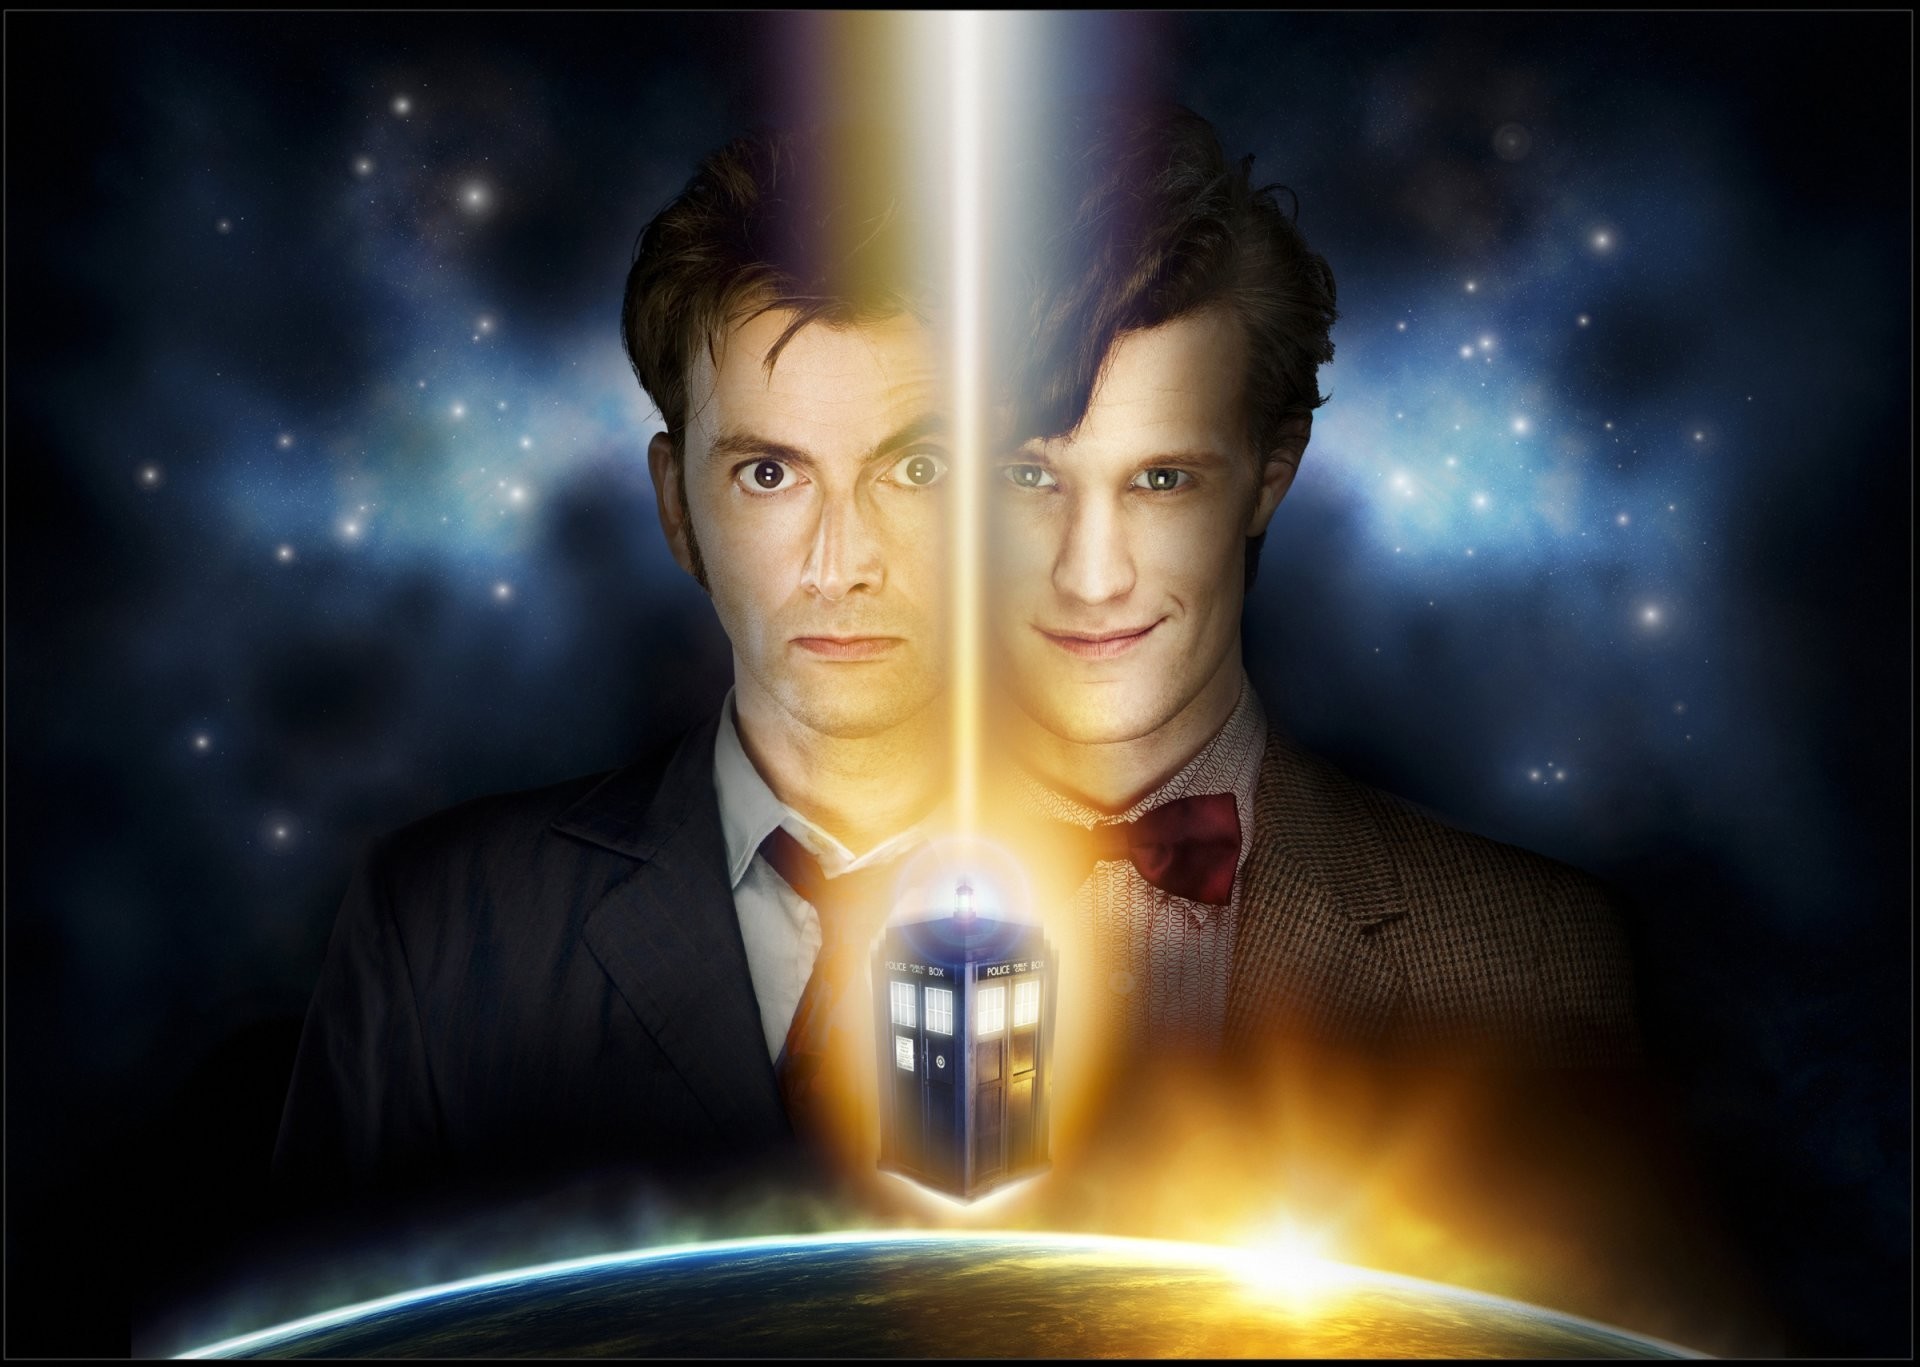 doctor who doctor who david tennant david tennant matt smith matt smith  space star police box